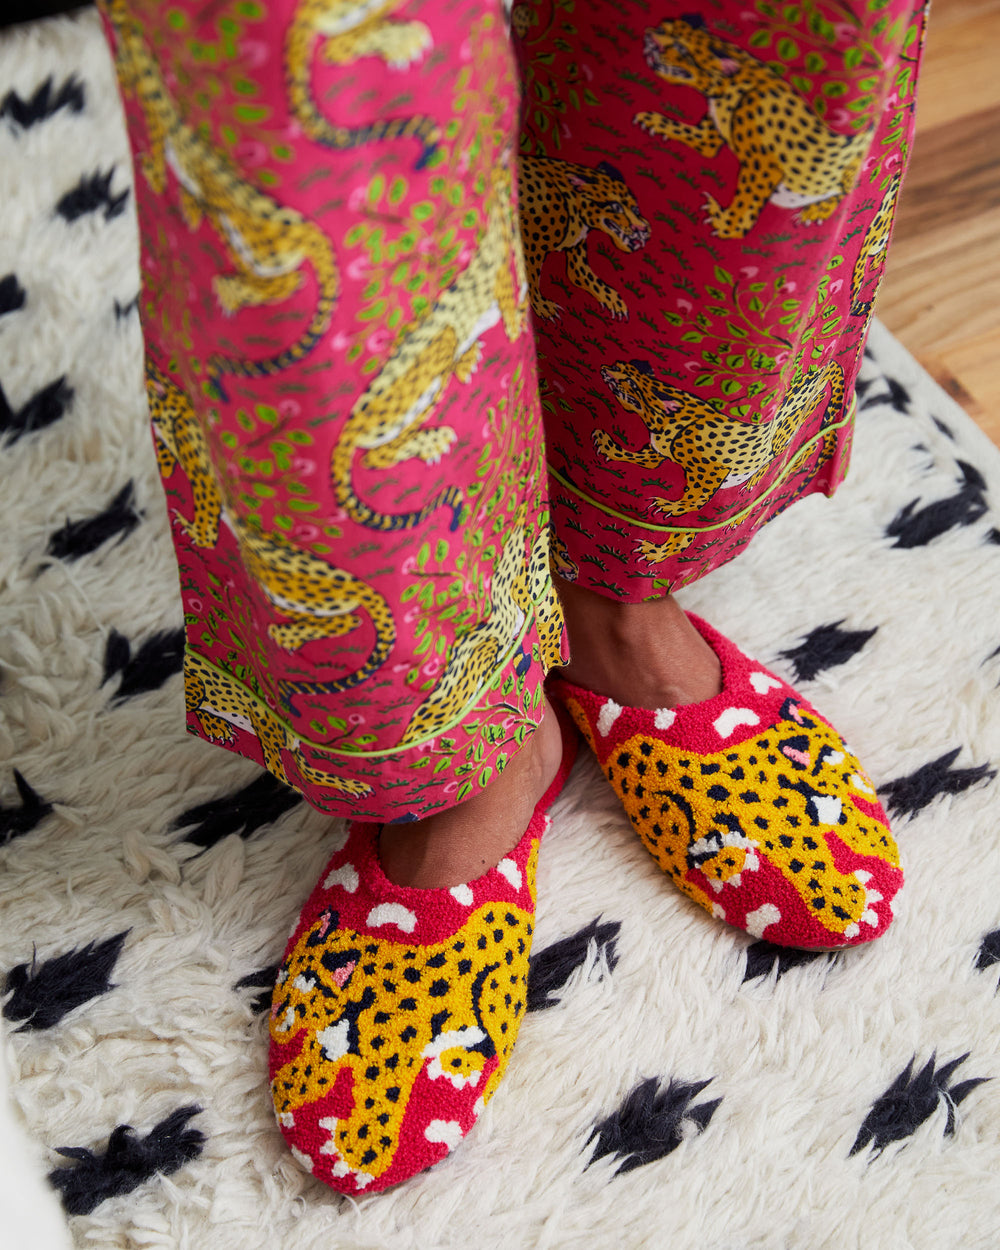 Lingeramas - Sexy Leopard Print Lingerie Legging Pajamas Leggings